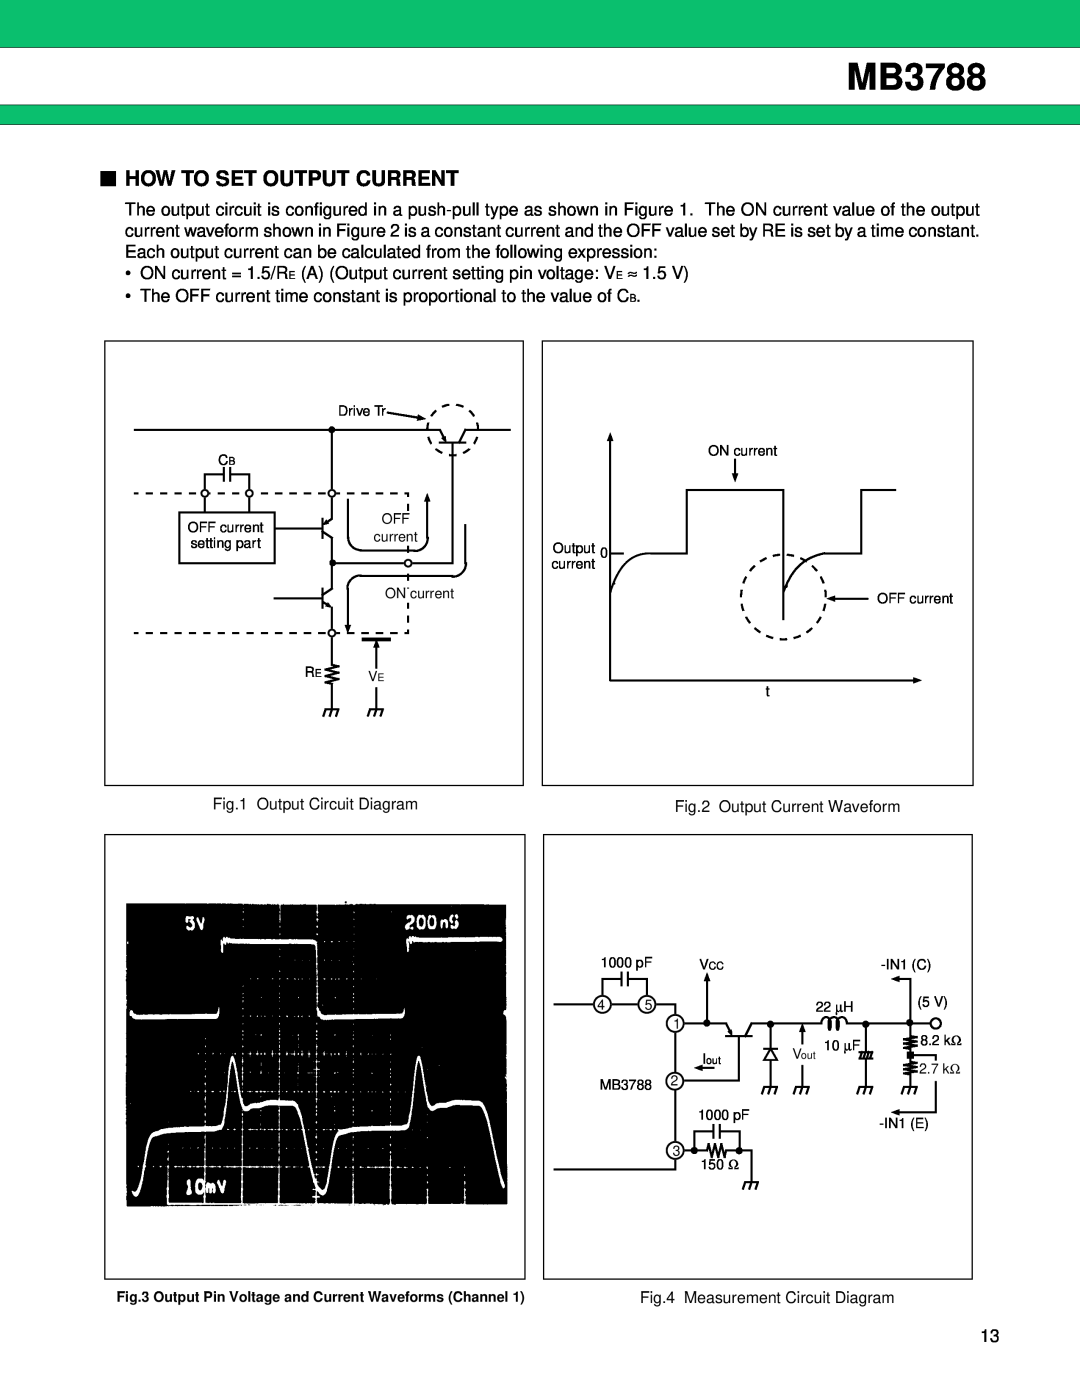 Fujitsu MB3788 manual How To Set Output Current 